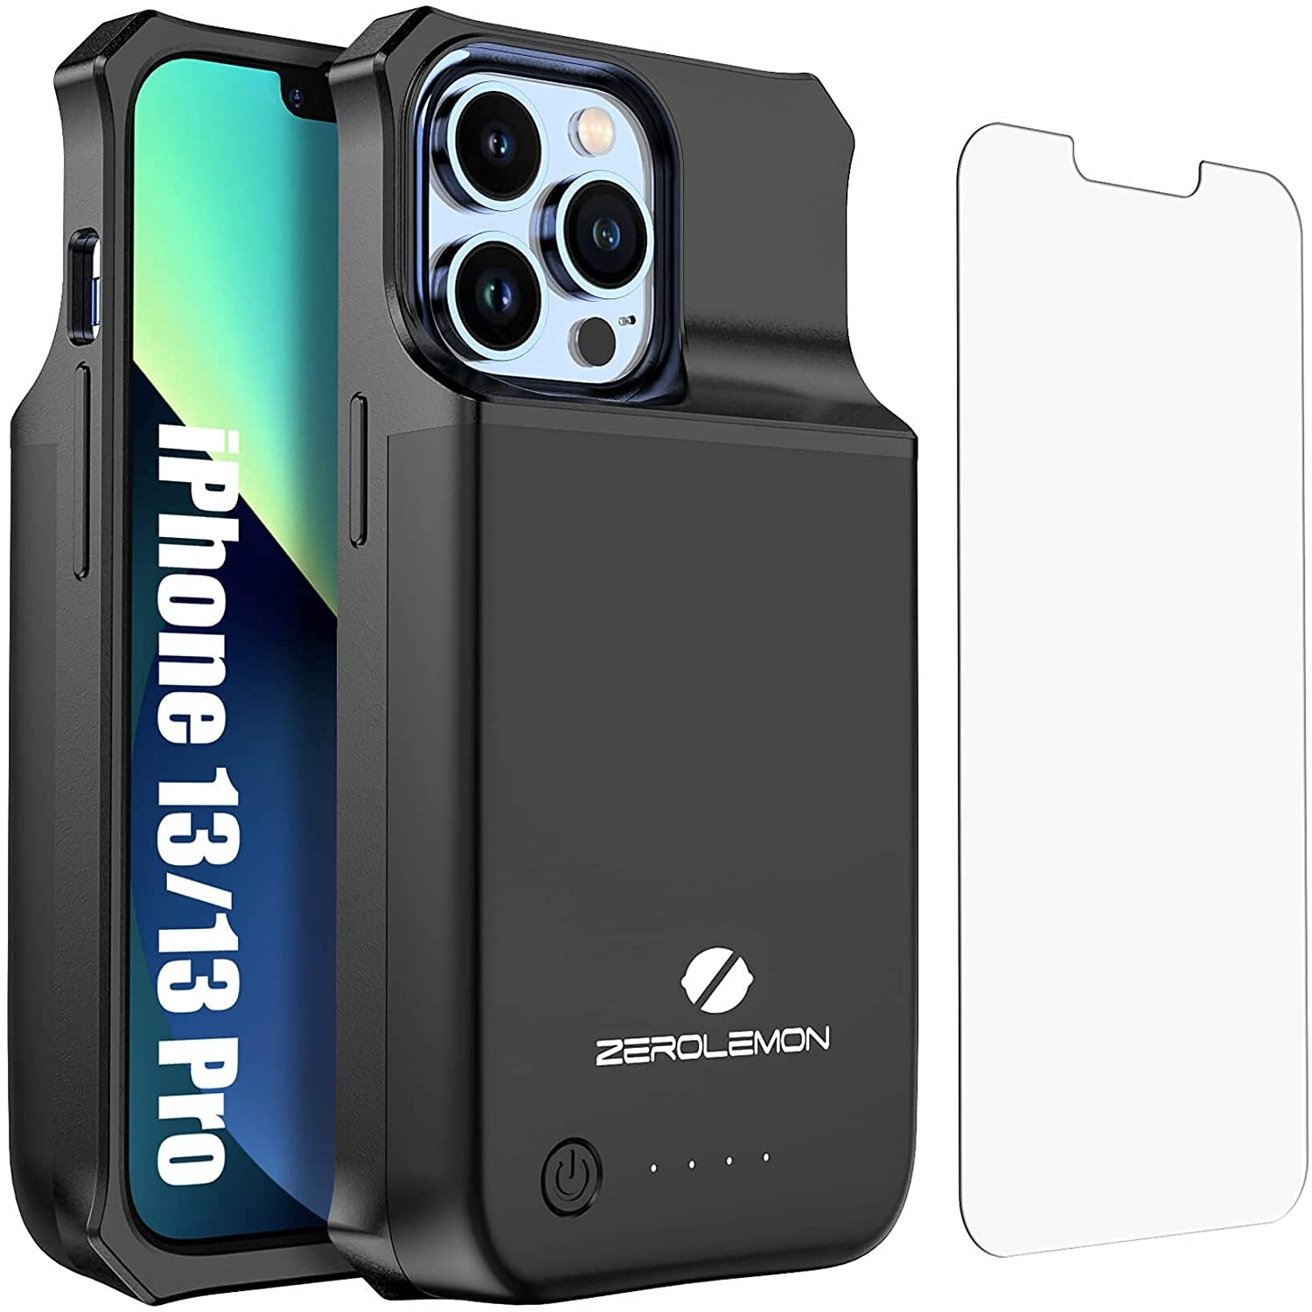 ZeroLemon battery case